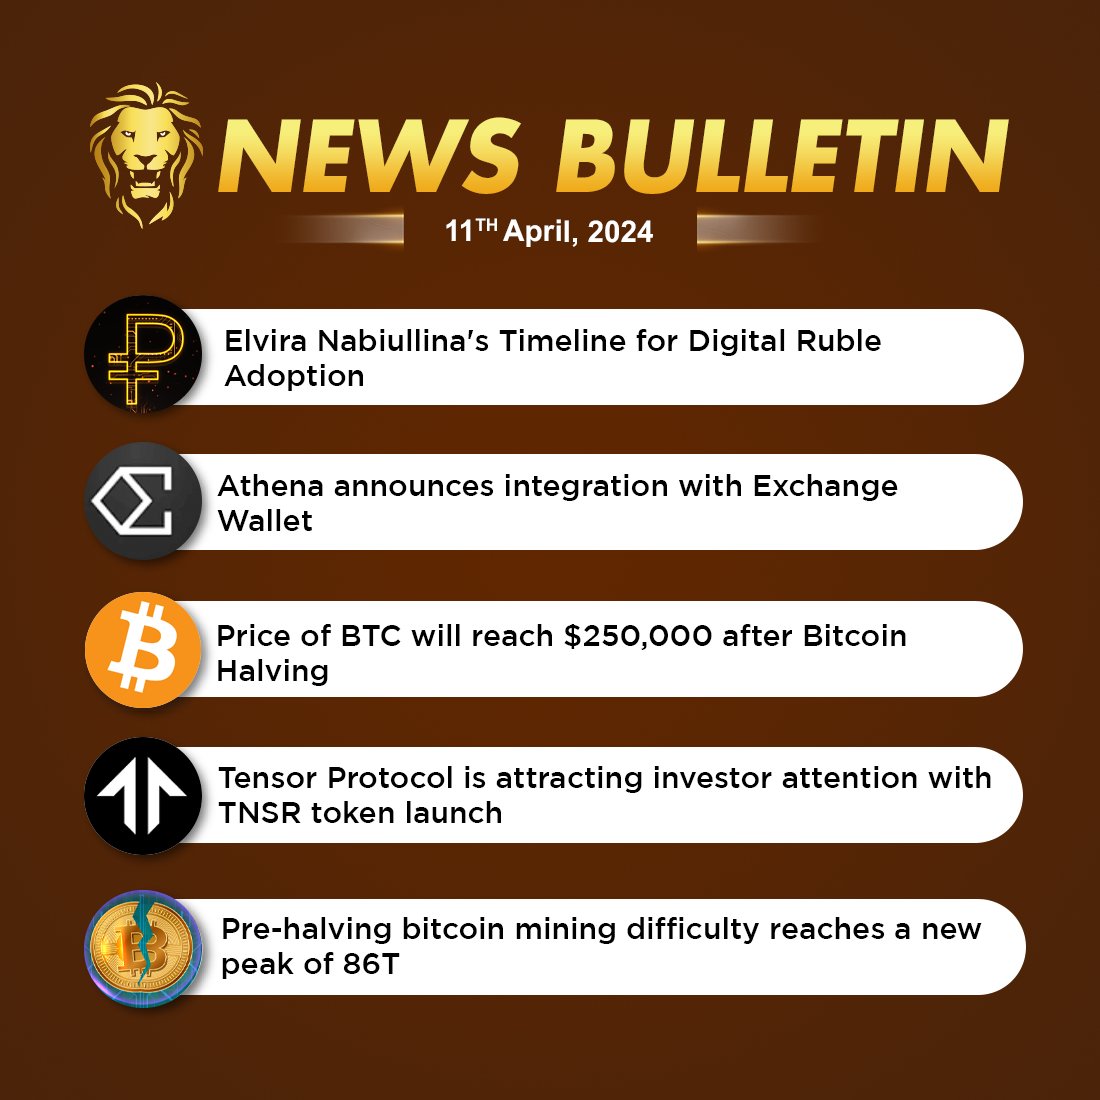 #CoinGabbar Latest News Bulletin: April 11th, 2024

Read More News: coingabbar.com/en/crypto-news…

#CryptoNews #ElviraNabiullina #Athena #ExchangeWallet #BTC #BitcoinHalving #TensorProtocol #TNSRtoken #bitcoinmining #cryptocurrencies